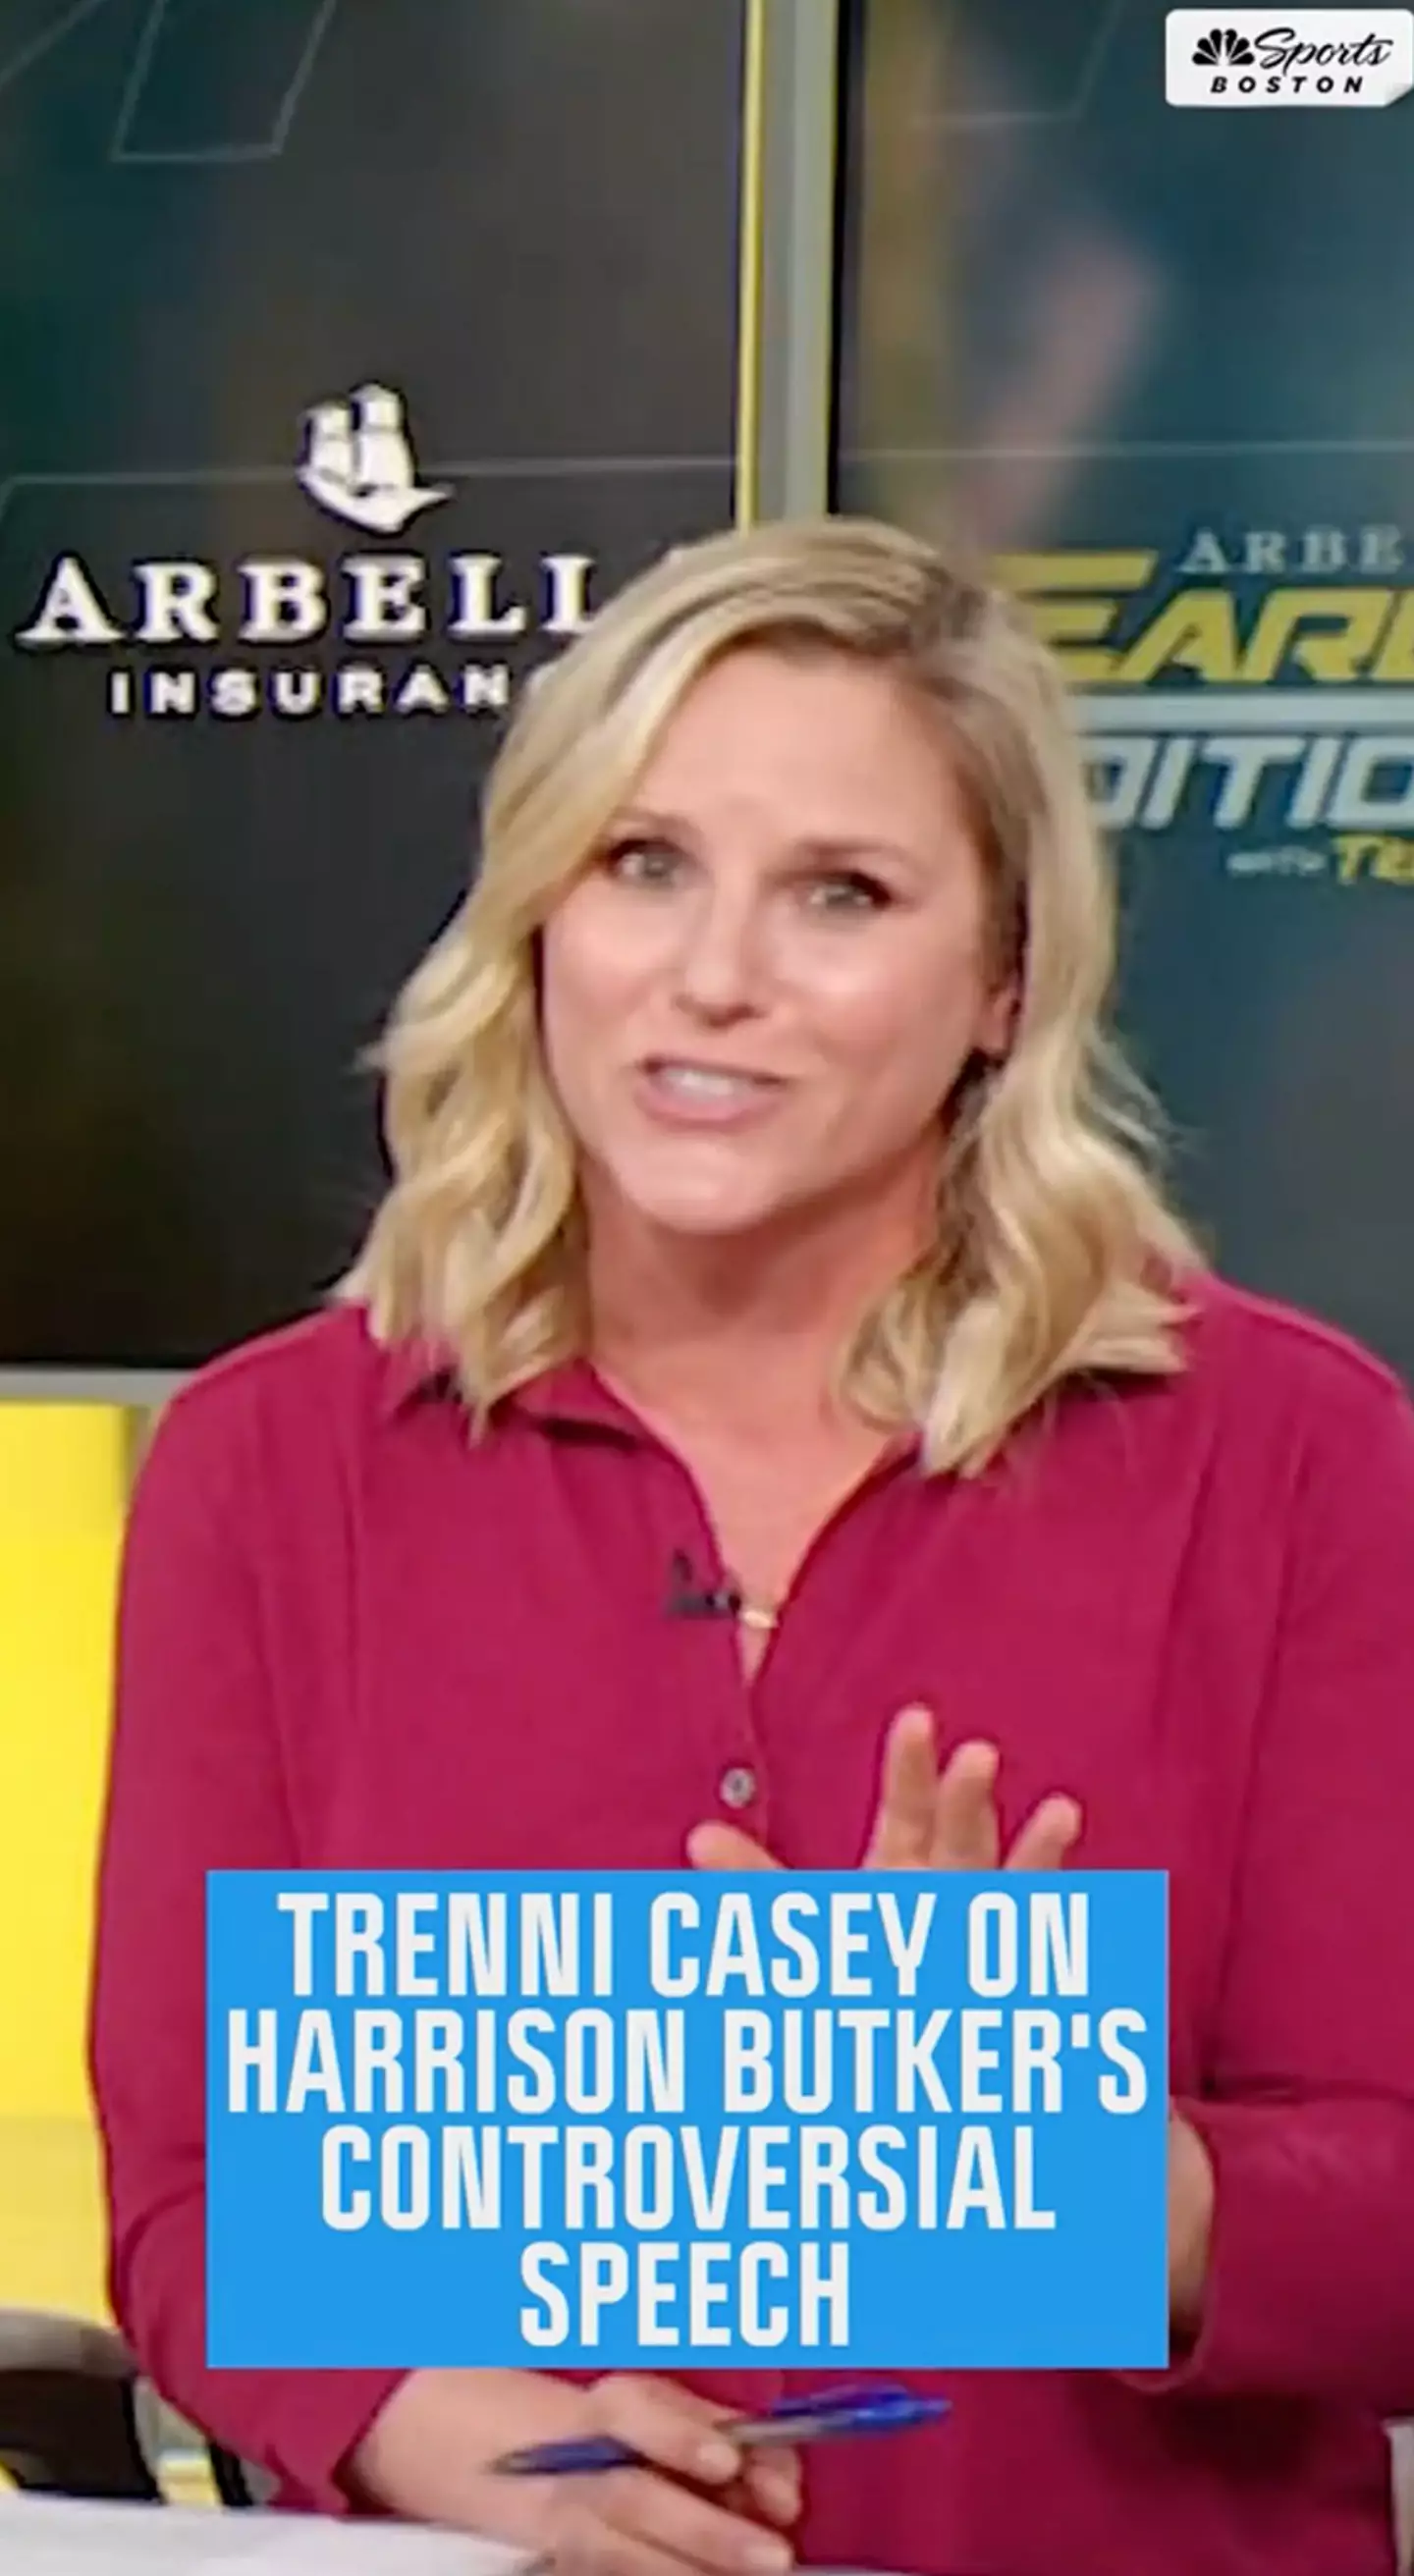 Trenni Casey has been praised by fans for hitting back at Butker's speech. (NBC Sports Boston/Tiktok)